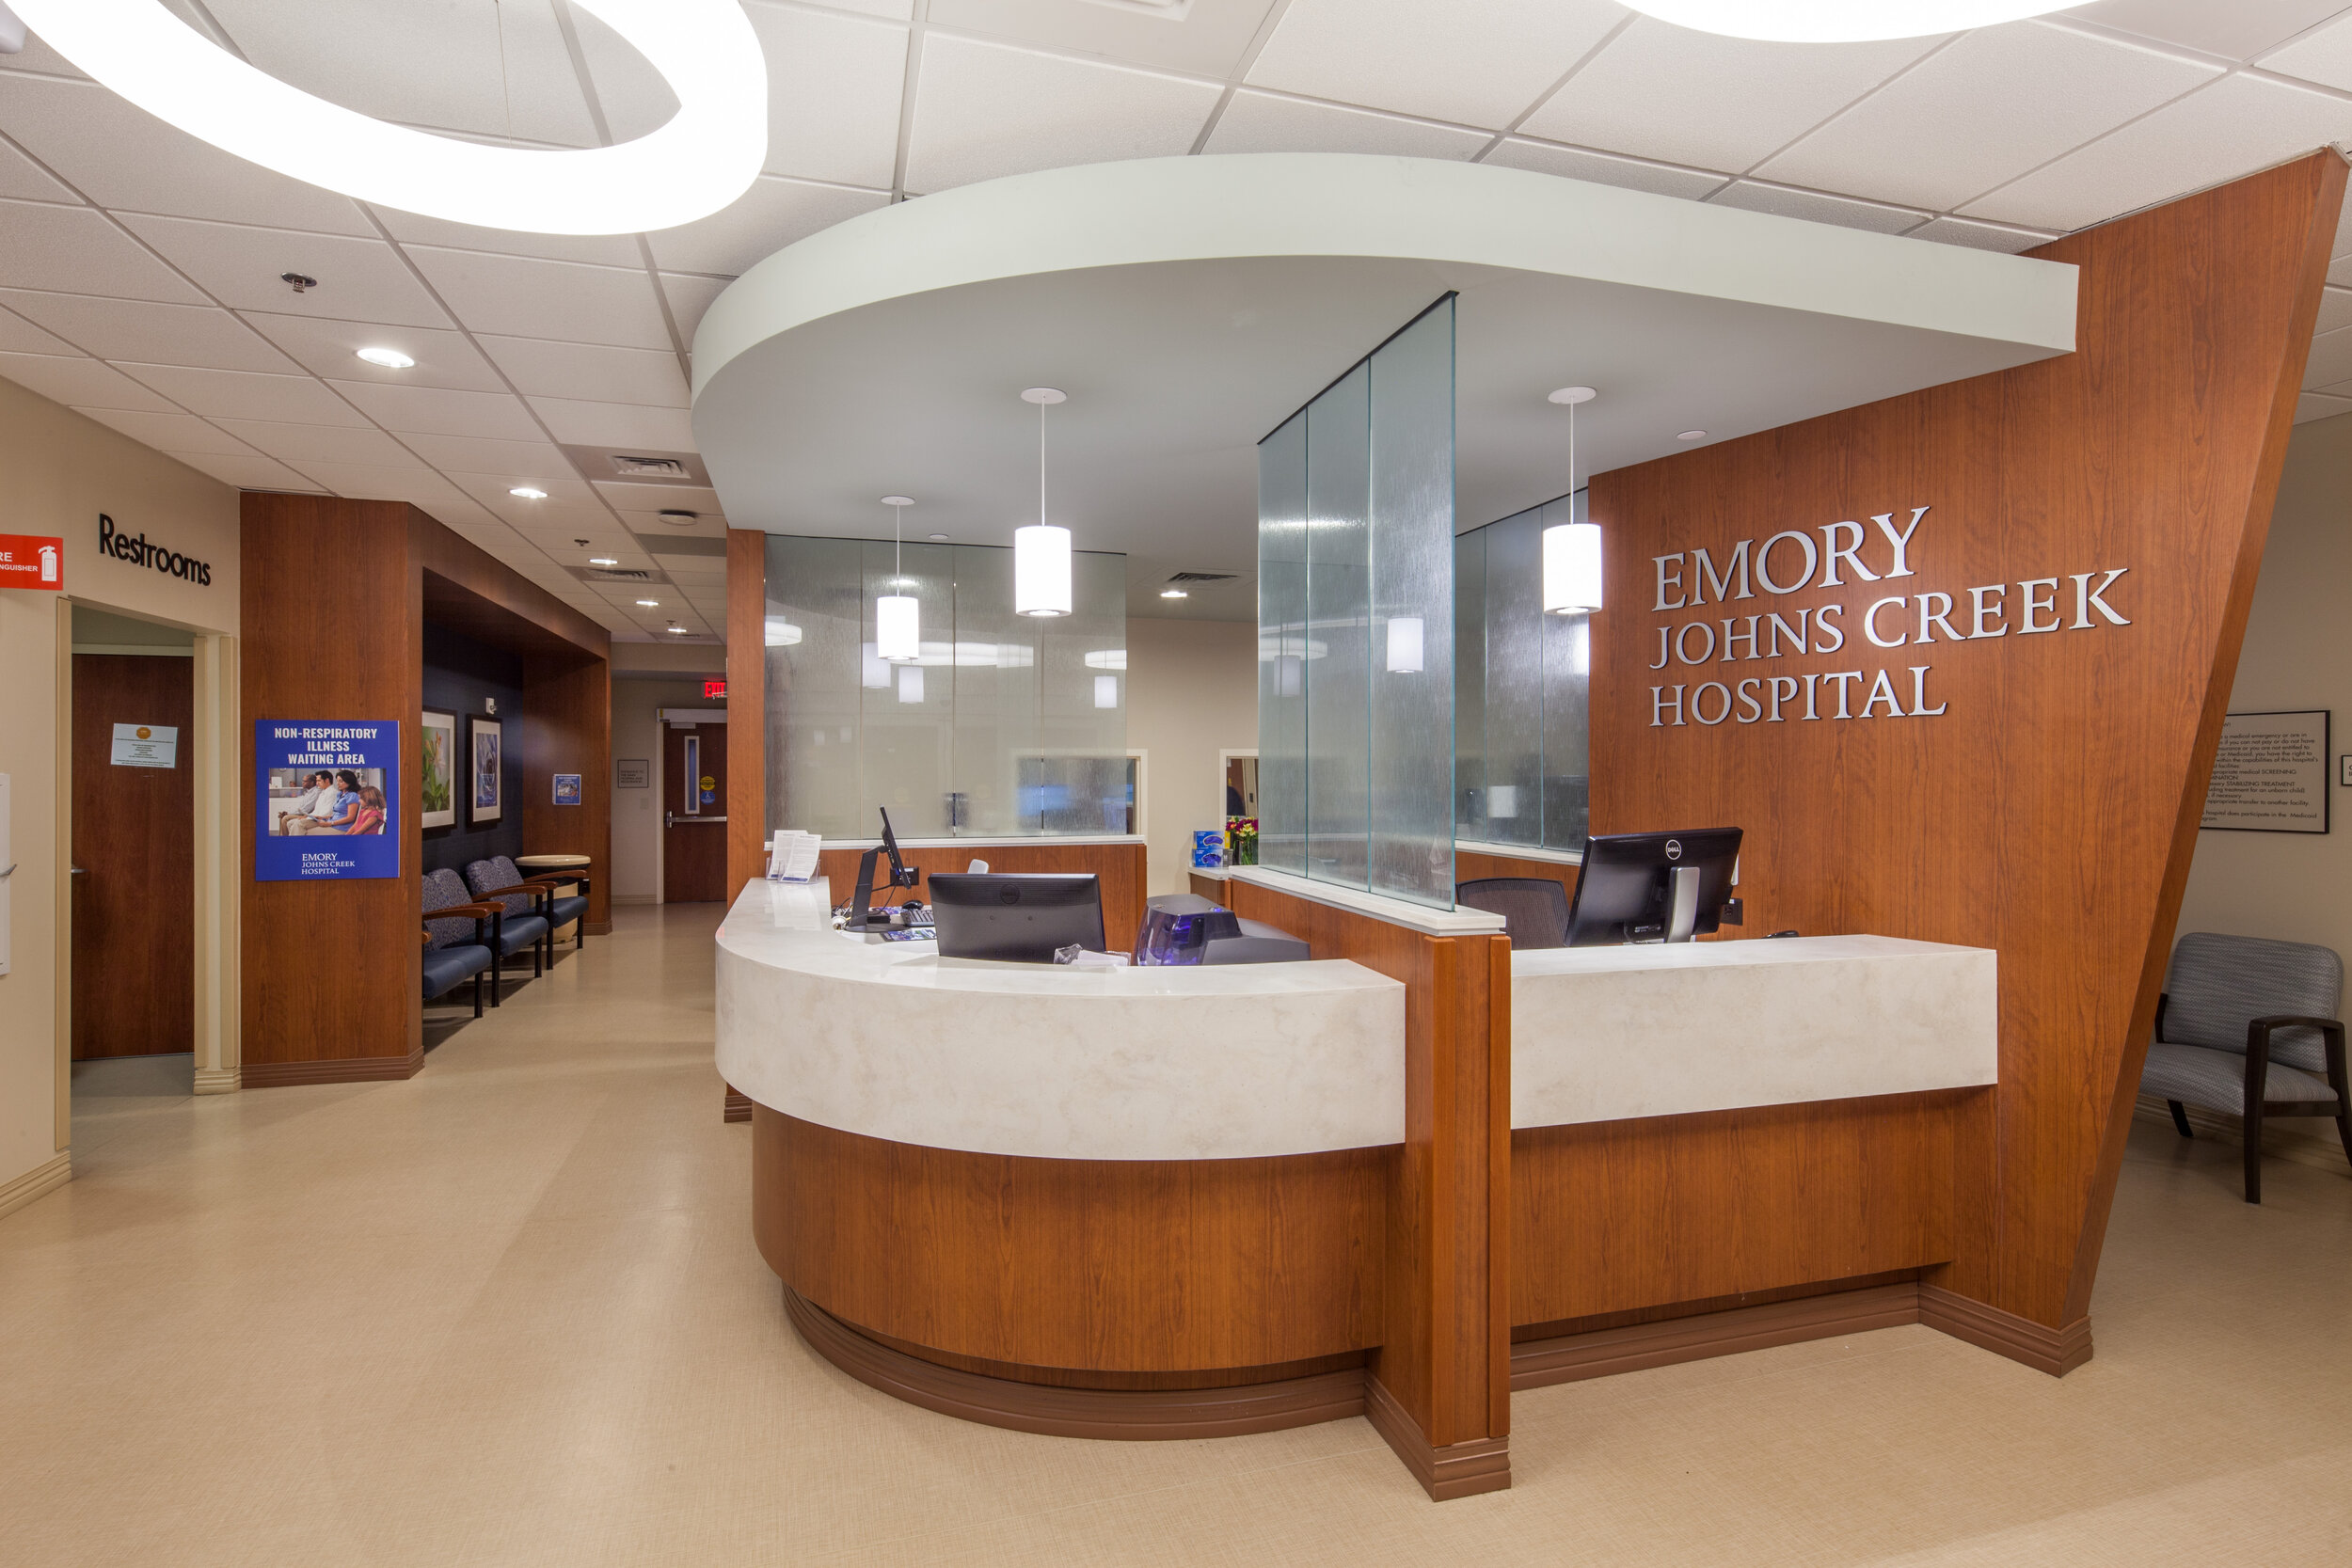  2020 AGC Award Winner - Emory Johns Creek Hospital-Emergency Room Renovations 